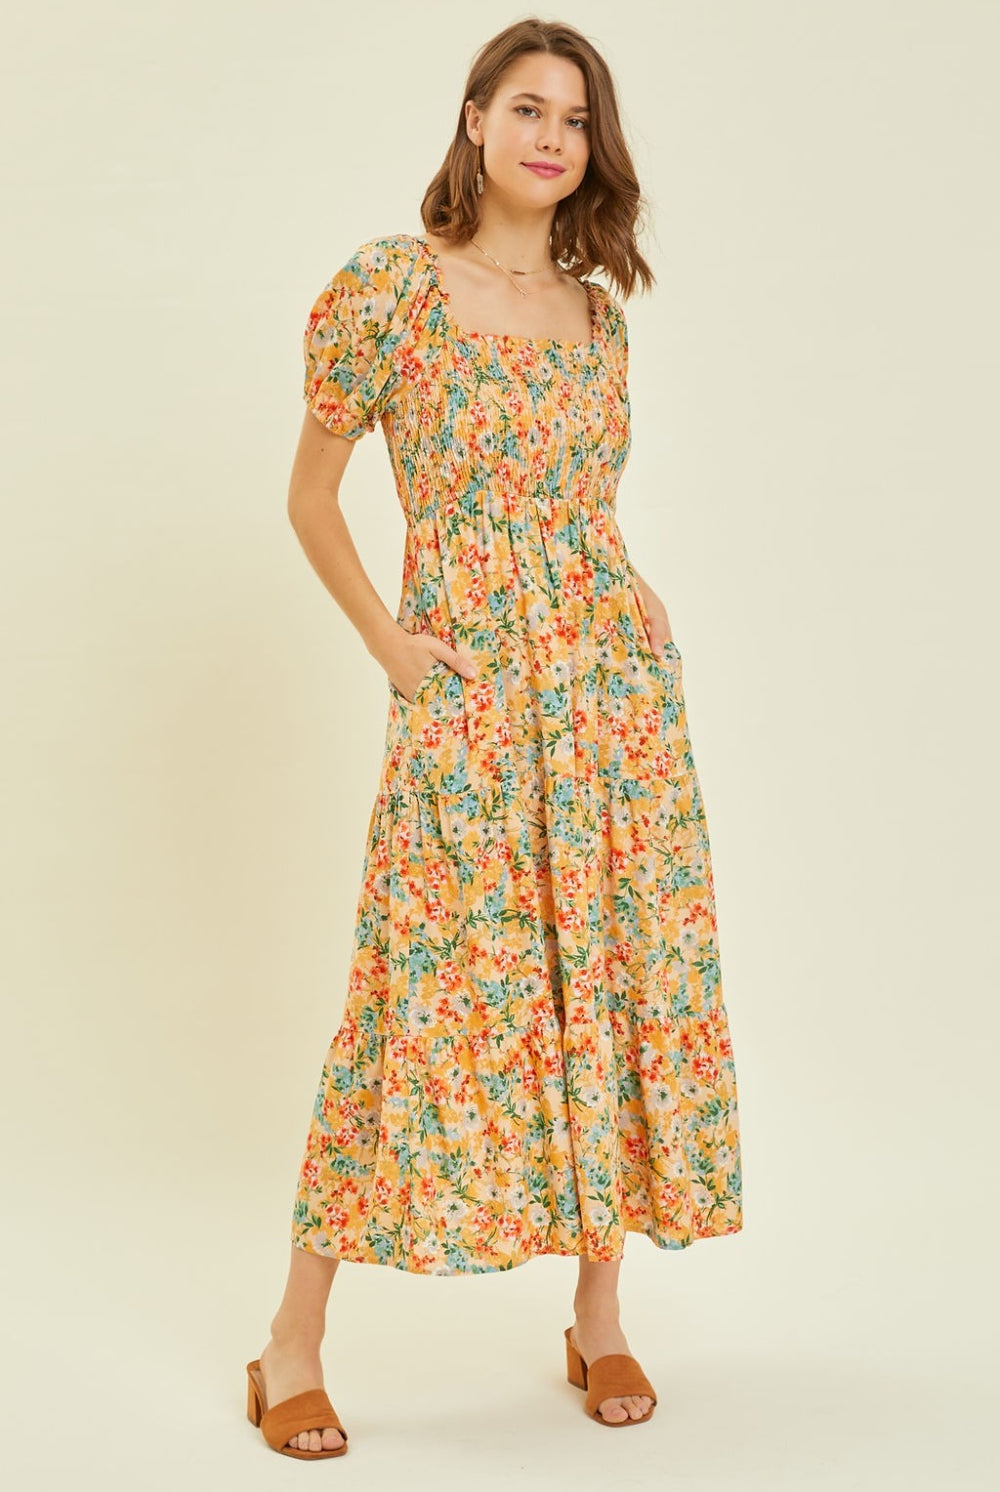 HEYSON Full Size Floral Smocked Tiered Midi Dress - GemThreads Boutique HEYSON Full Size Floral Smocked Tiered Midi Dress